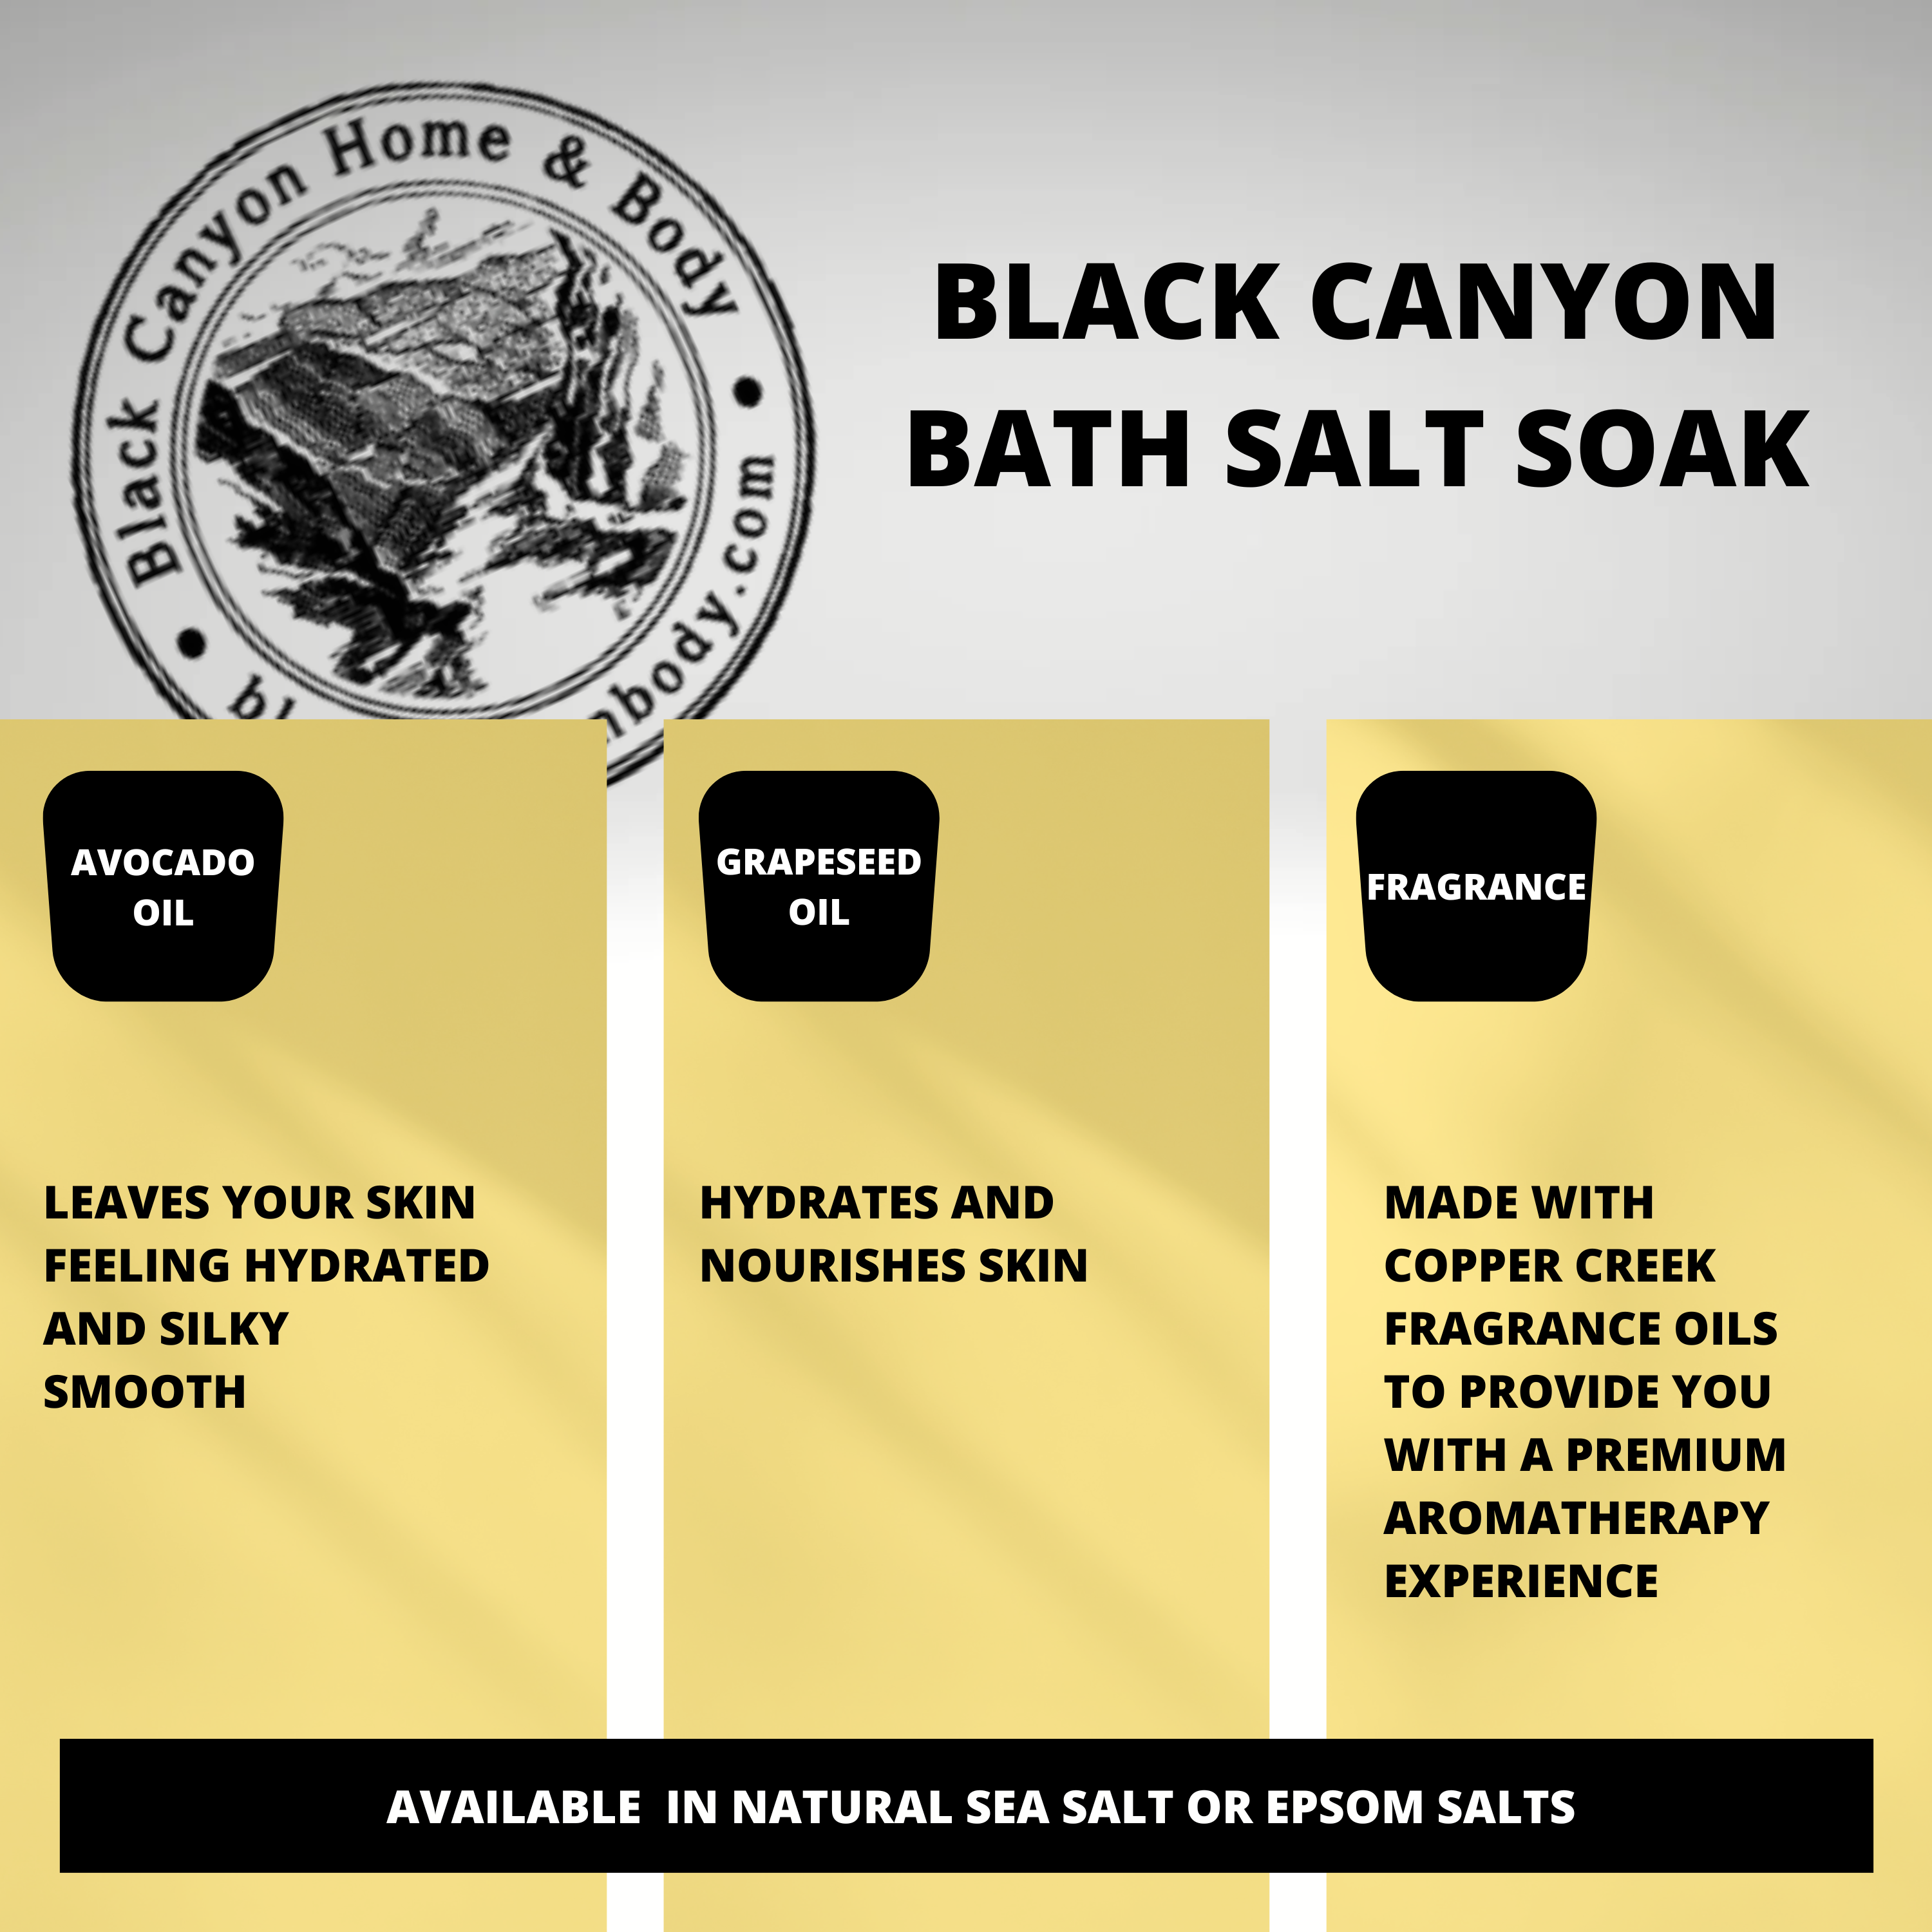 Black Canyon Apples & Acorns Scented Sea Salt Bath Soak